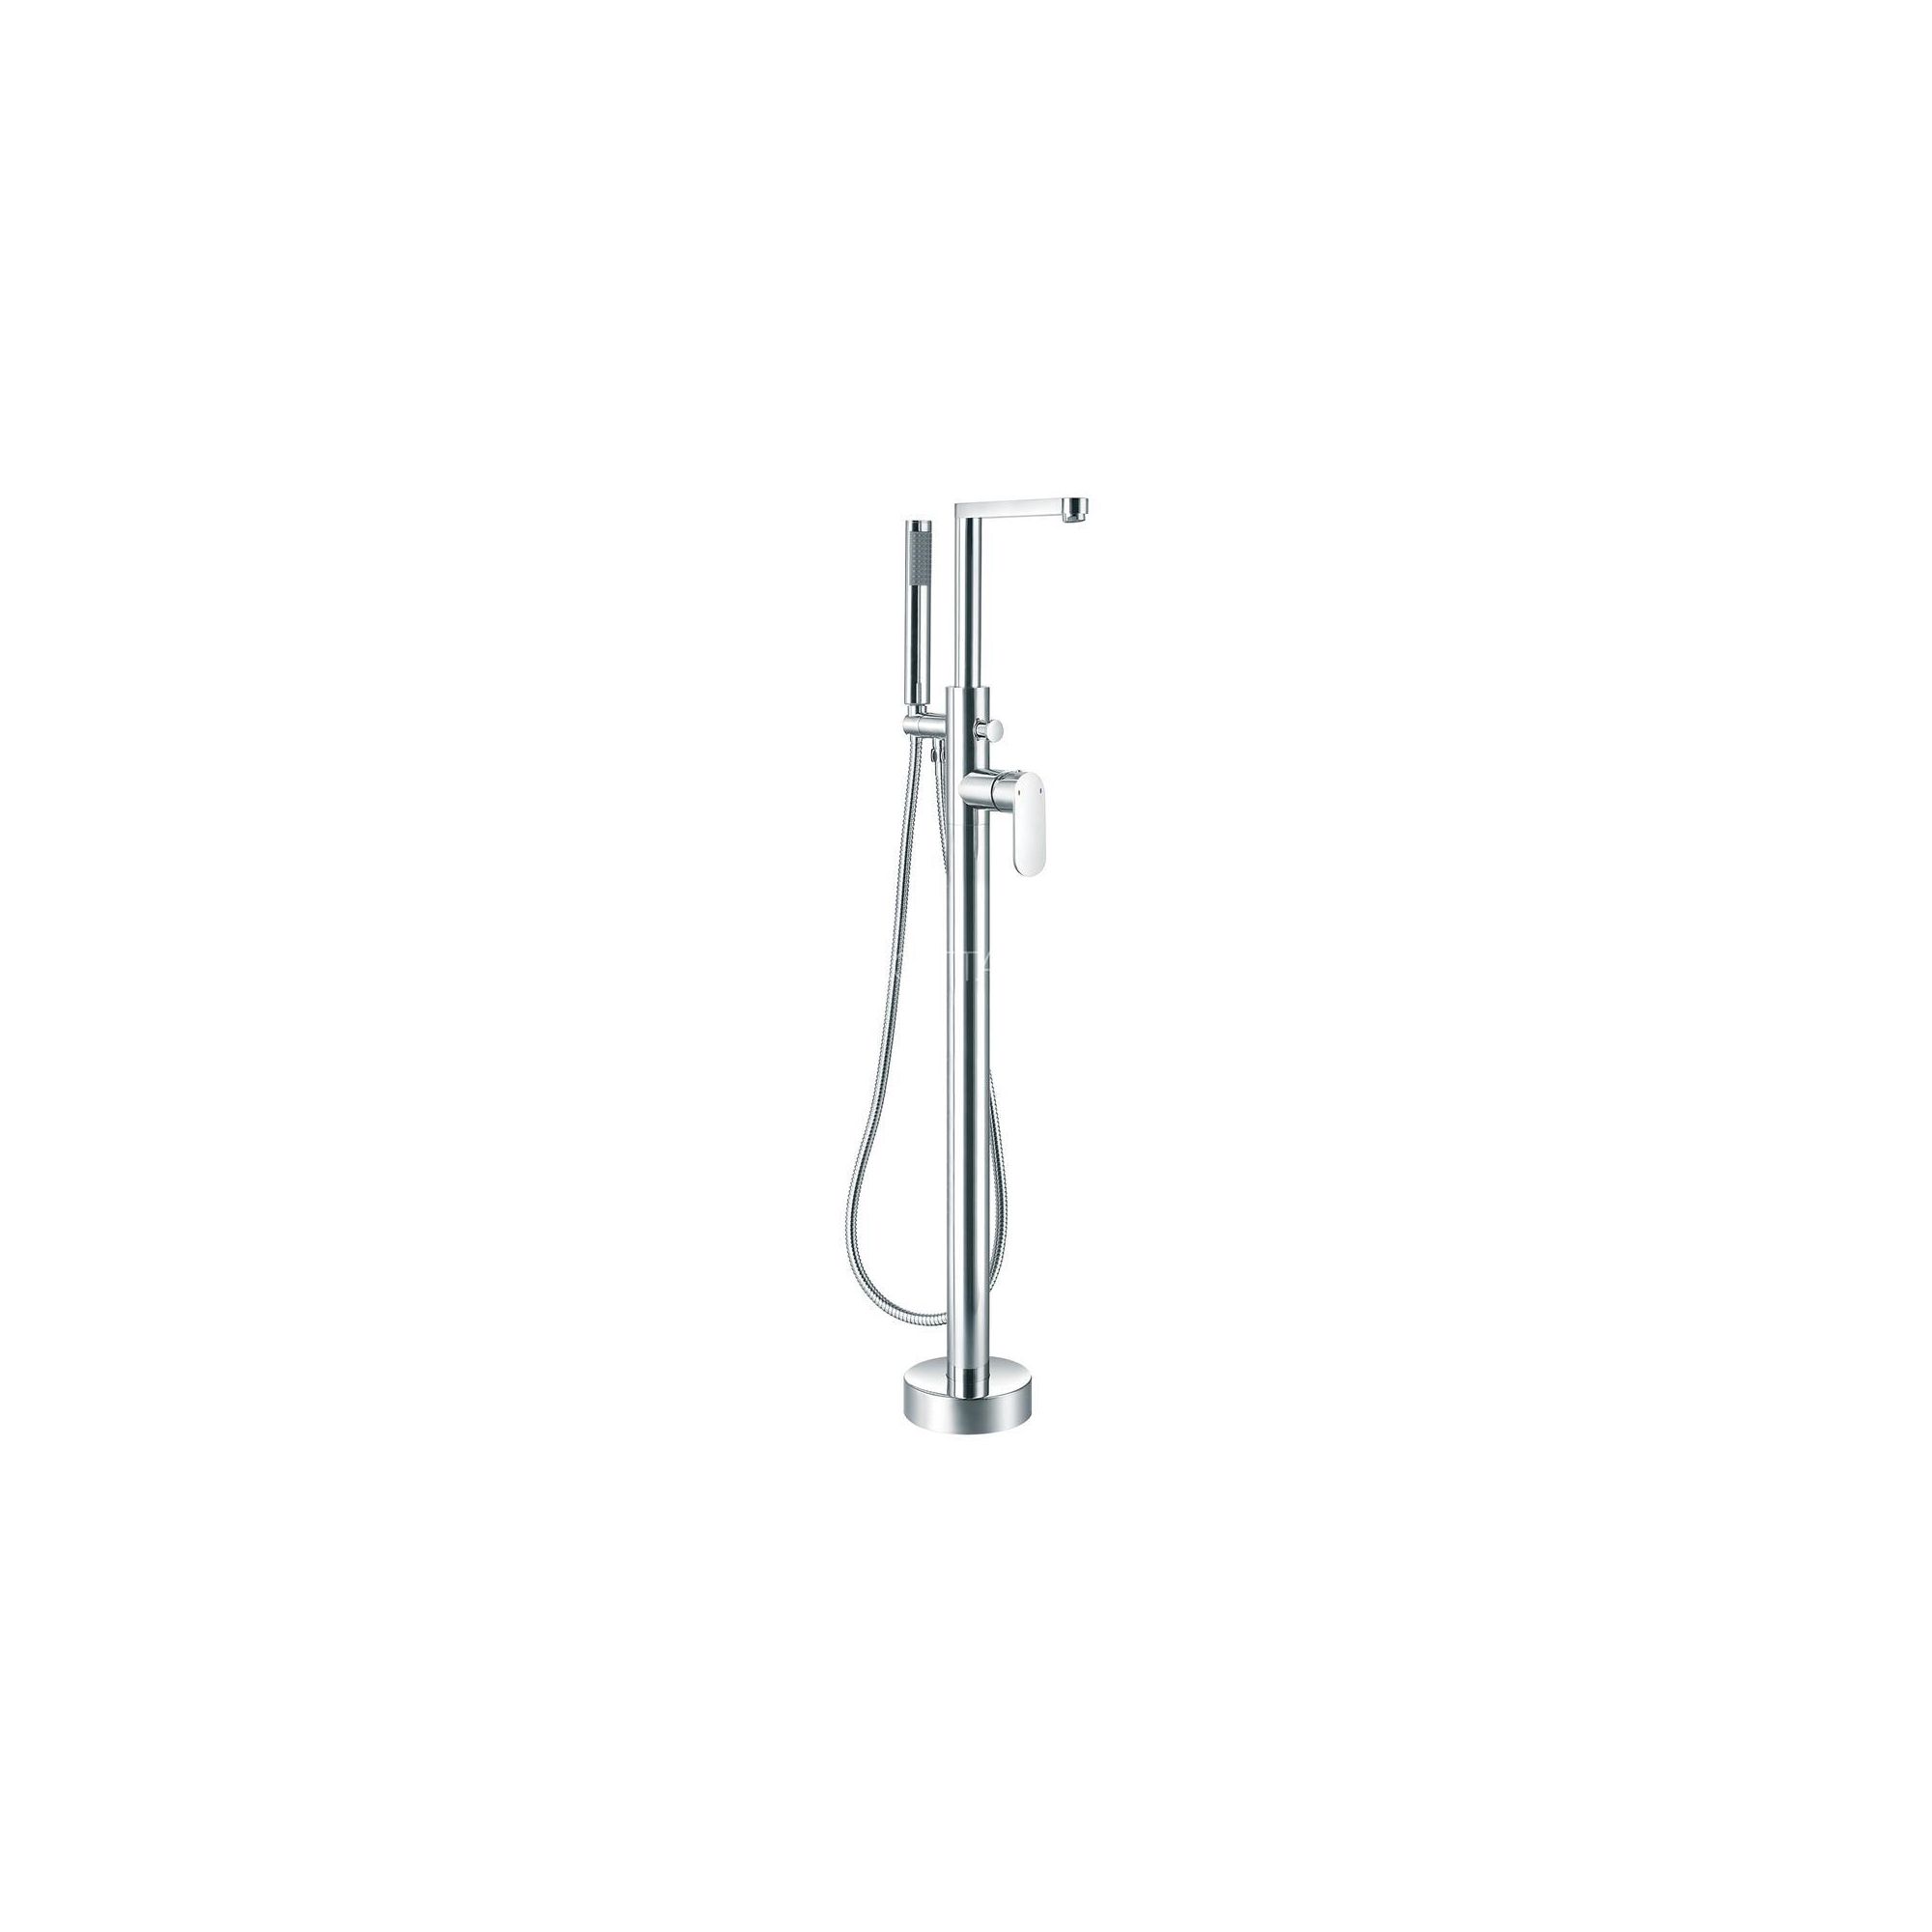 Sagittarius Metro Floor Mounted Bath Shower Mixer Tap with Shower Kit at Tescos Direct